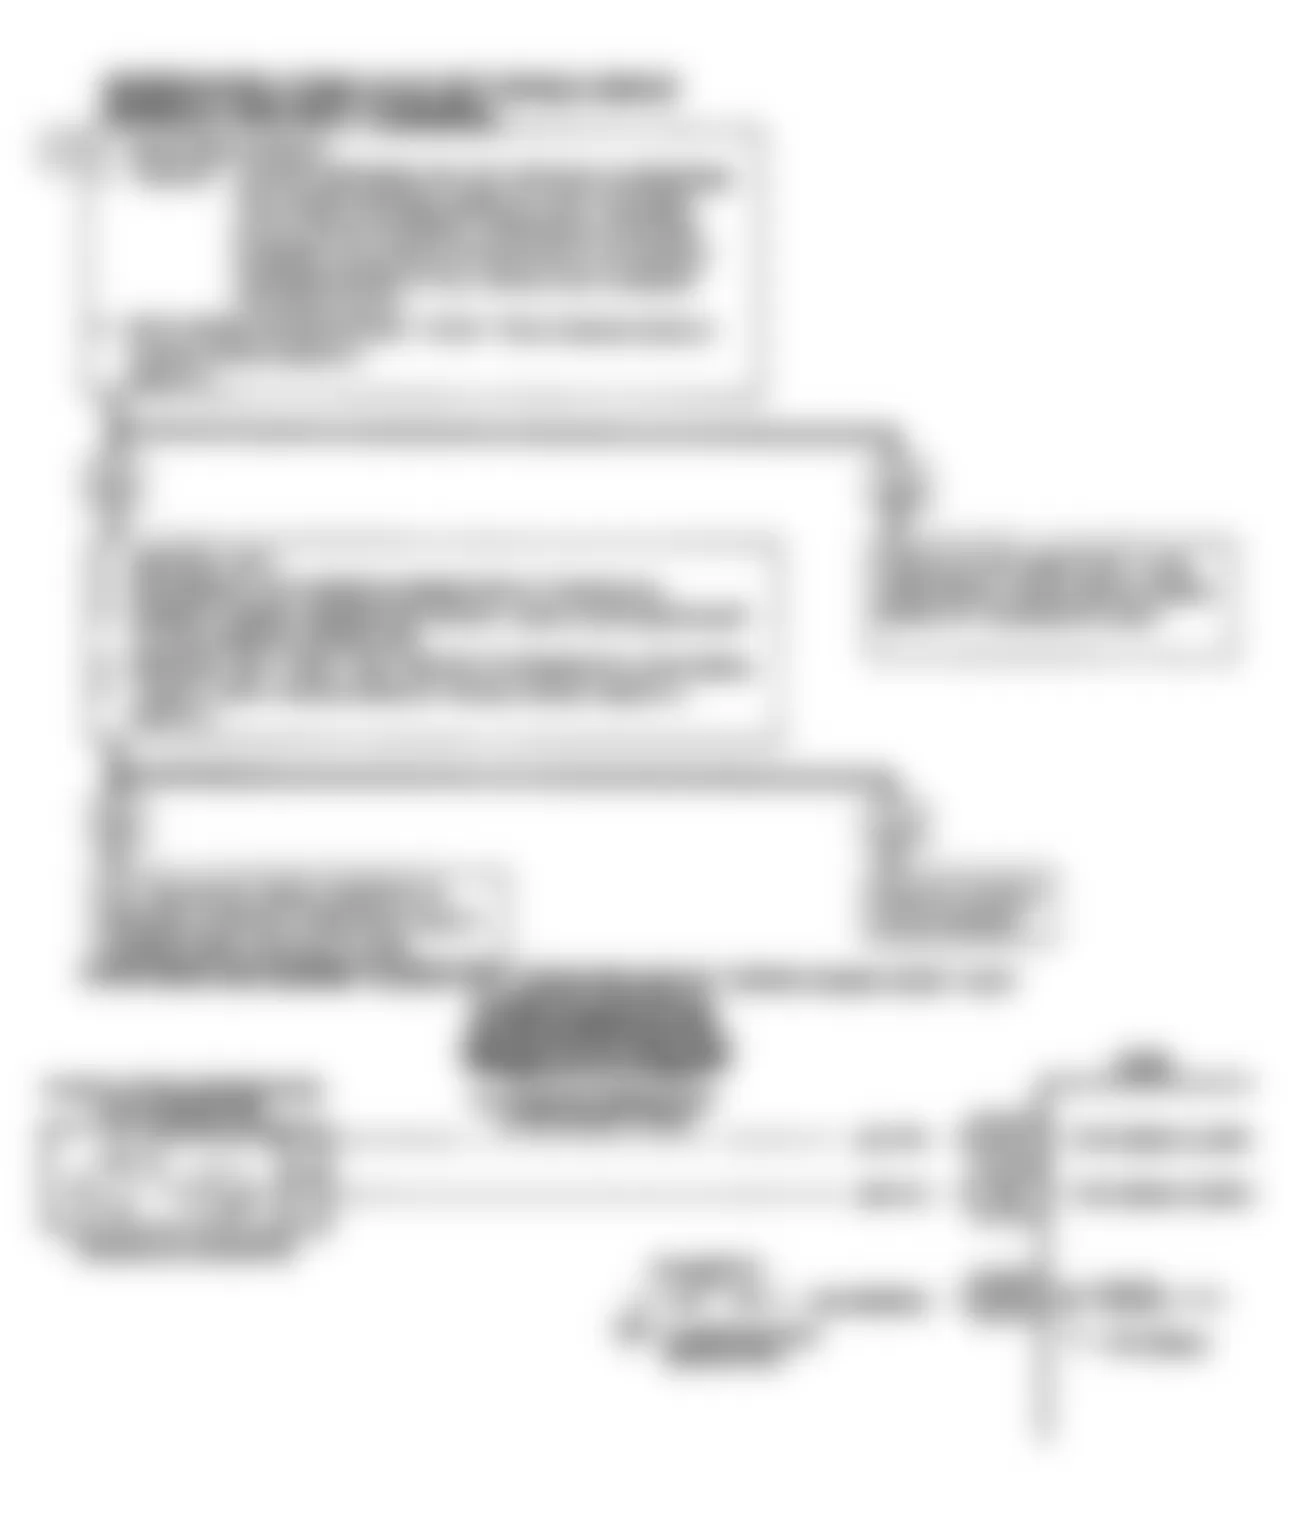 Chevrolet Cavalier VL 1990 - Component Locations -  Code 24, VSS Ckt Diag & Flow Chart (J Body)